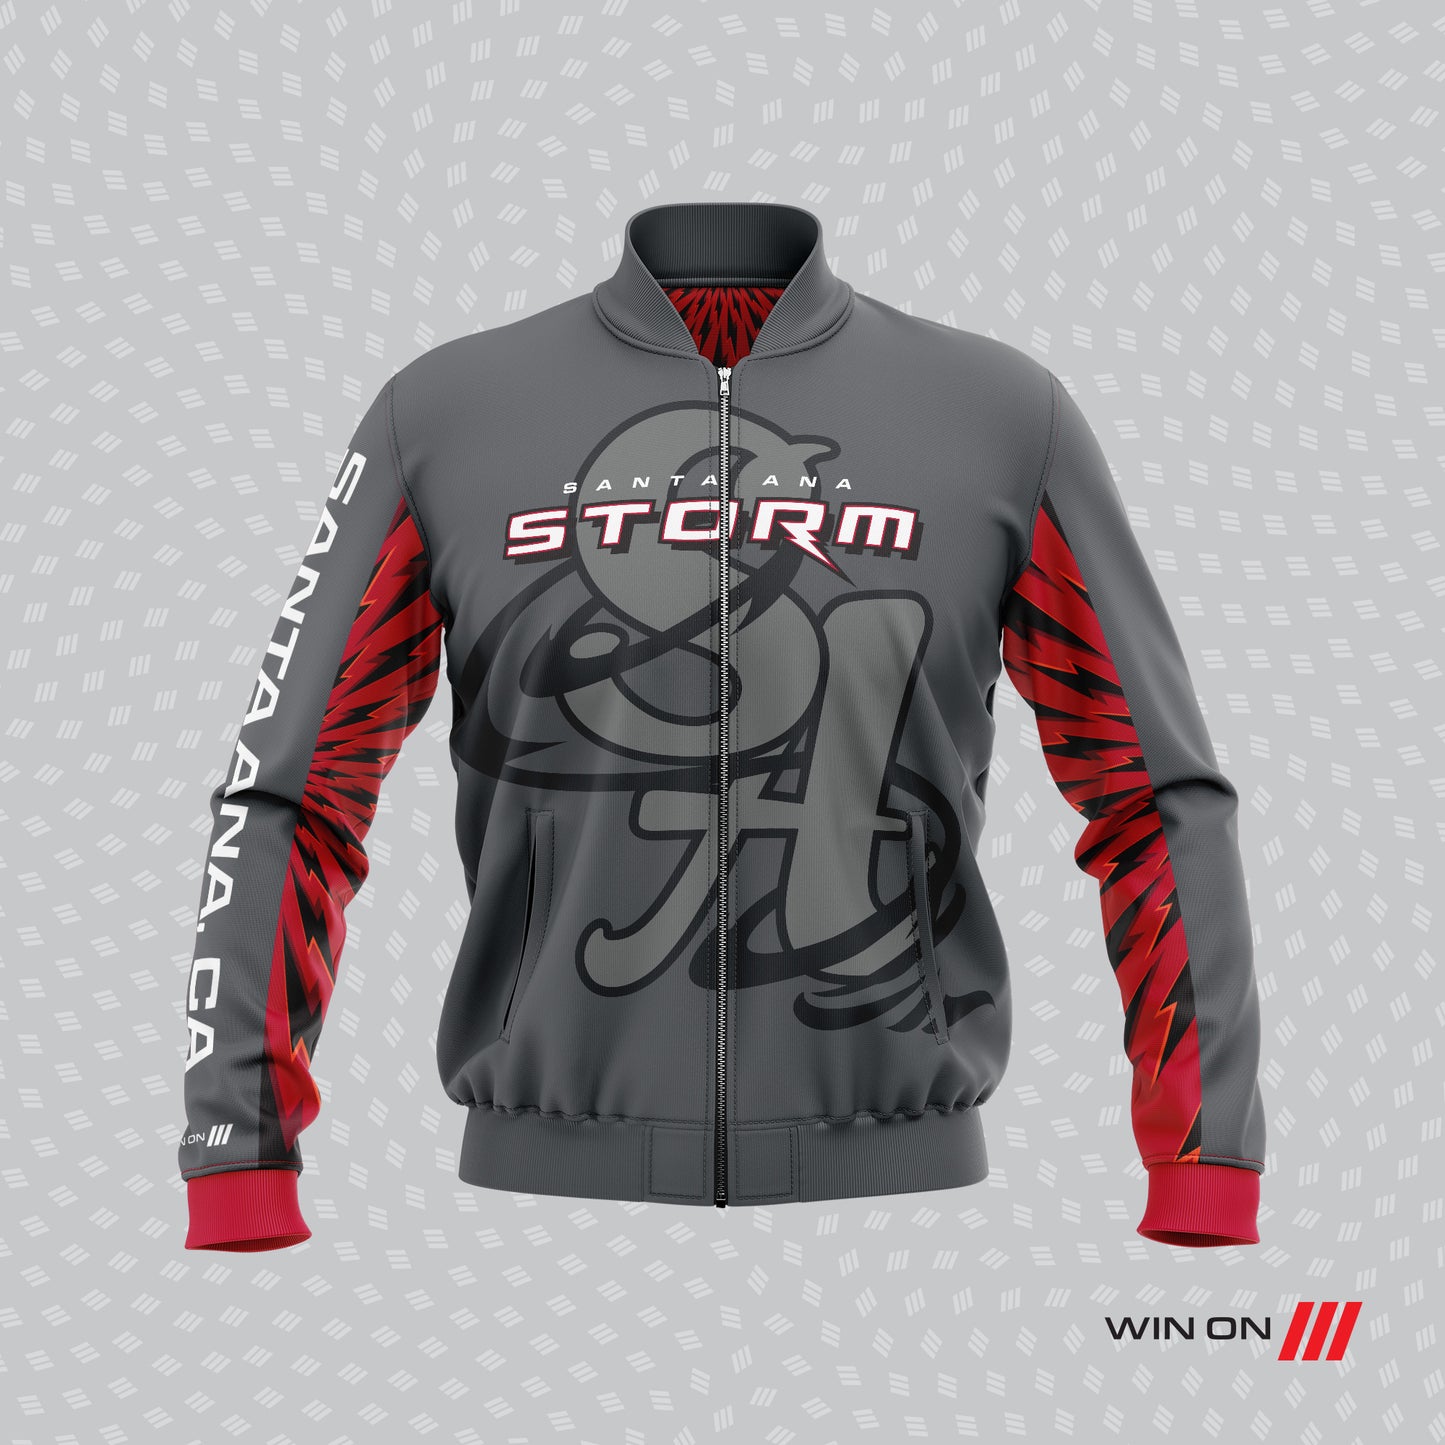 SA Storm Team Jacket